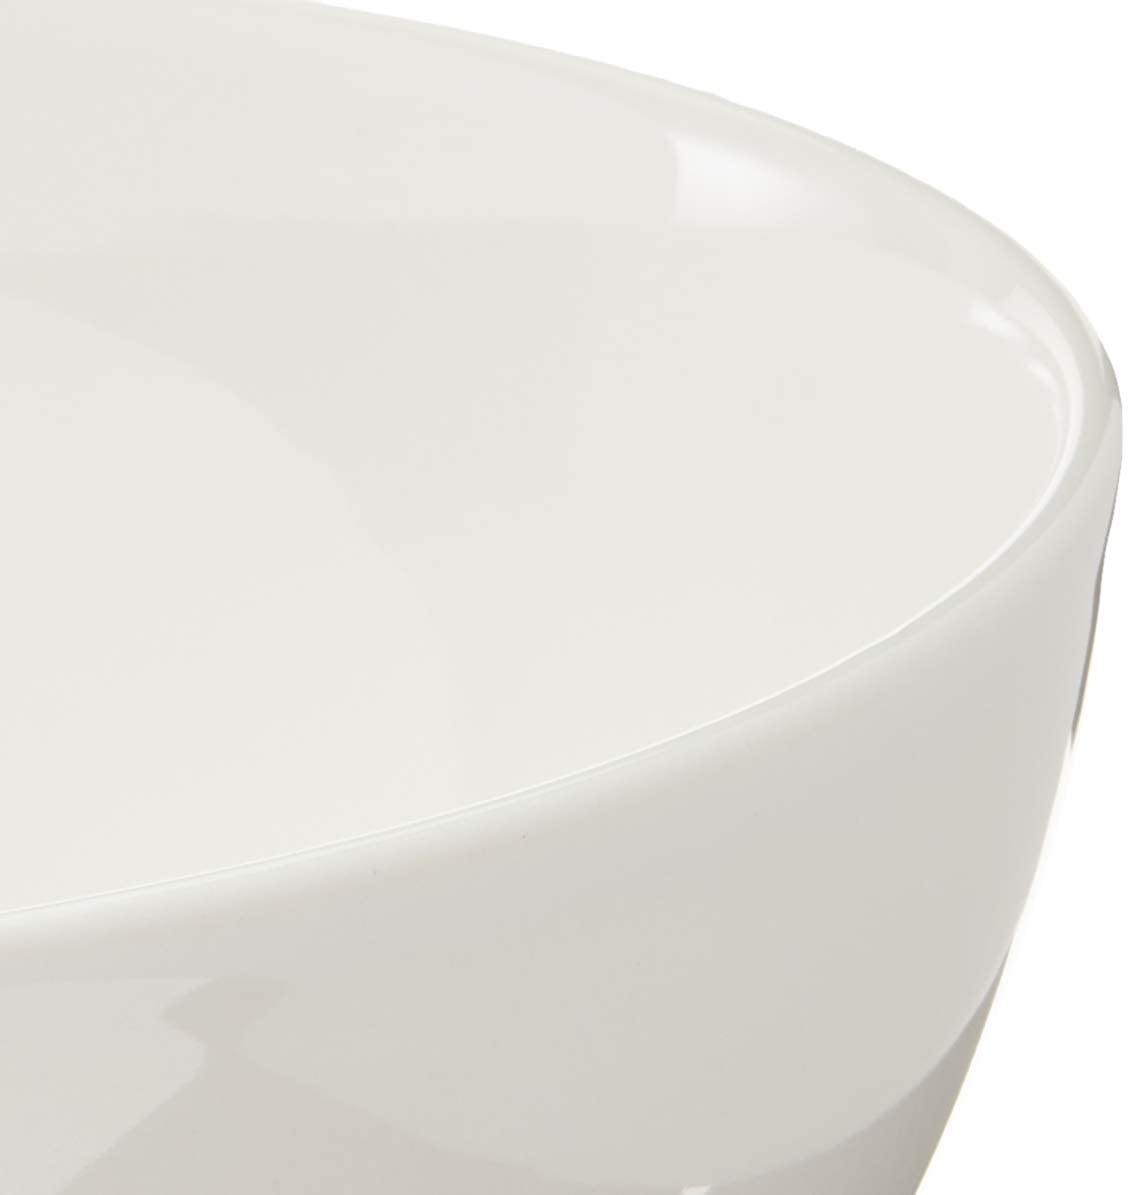 ASA 4772147 Bowl, White, 20 x 20 x 10 cm